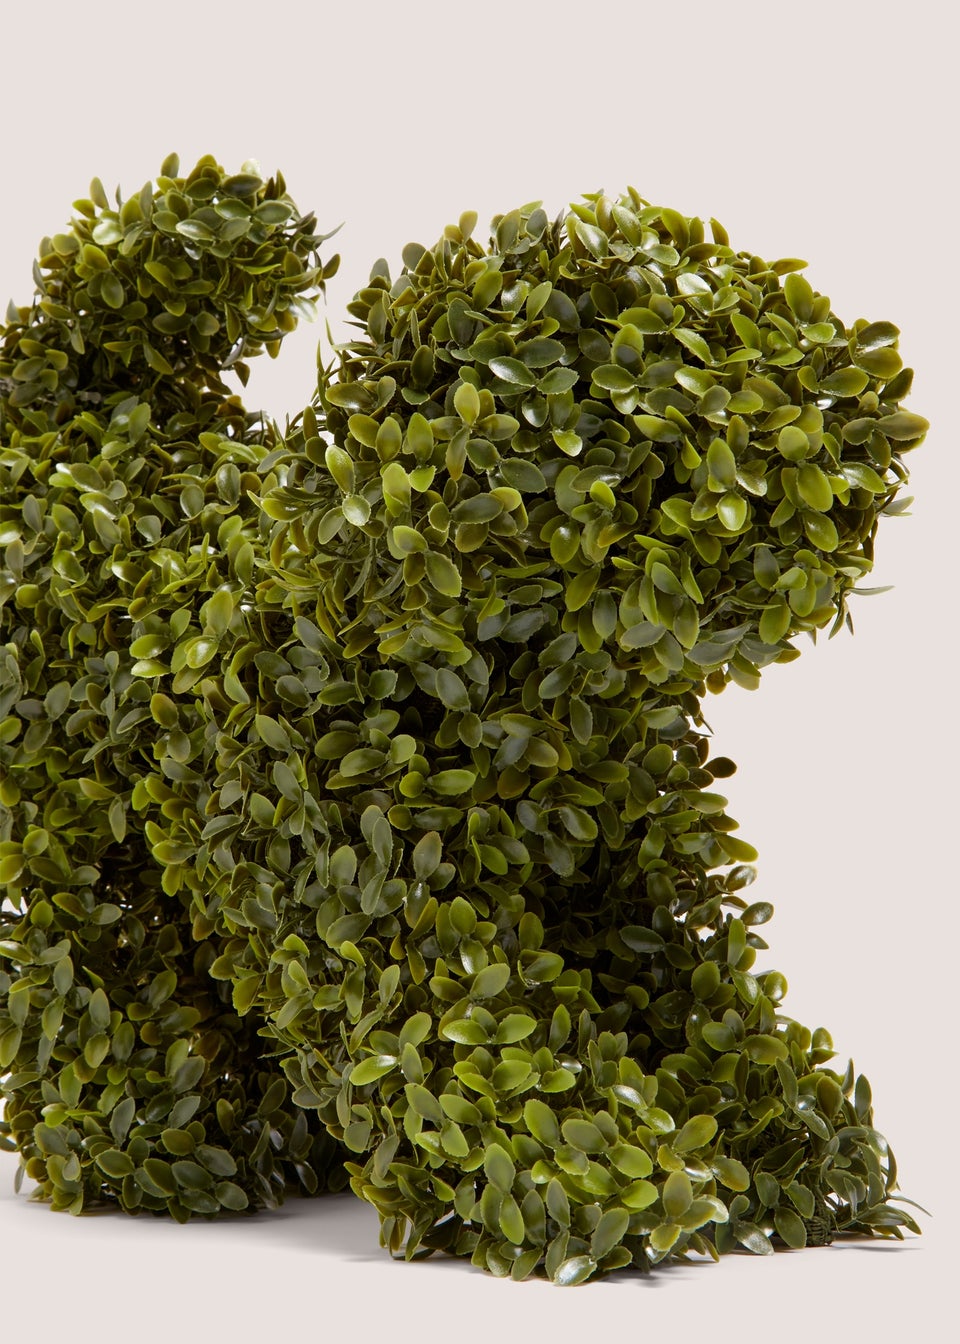 Stretching Dog Topiary (43cm x 25cm x 31cm)